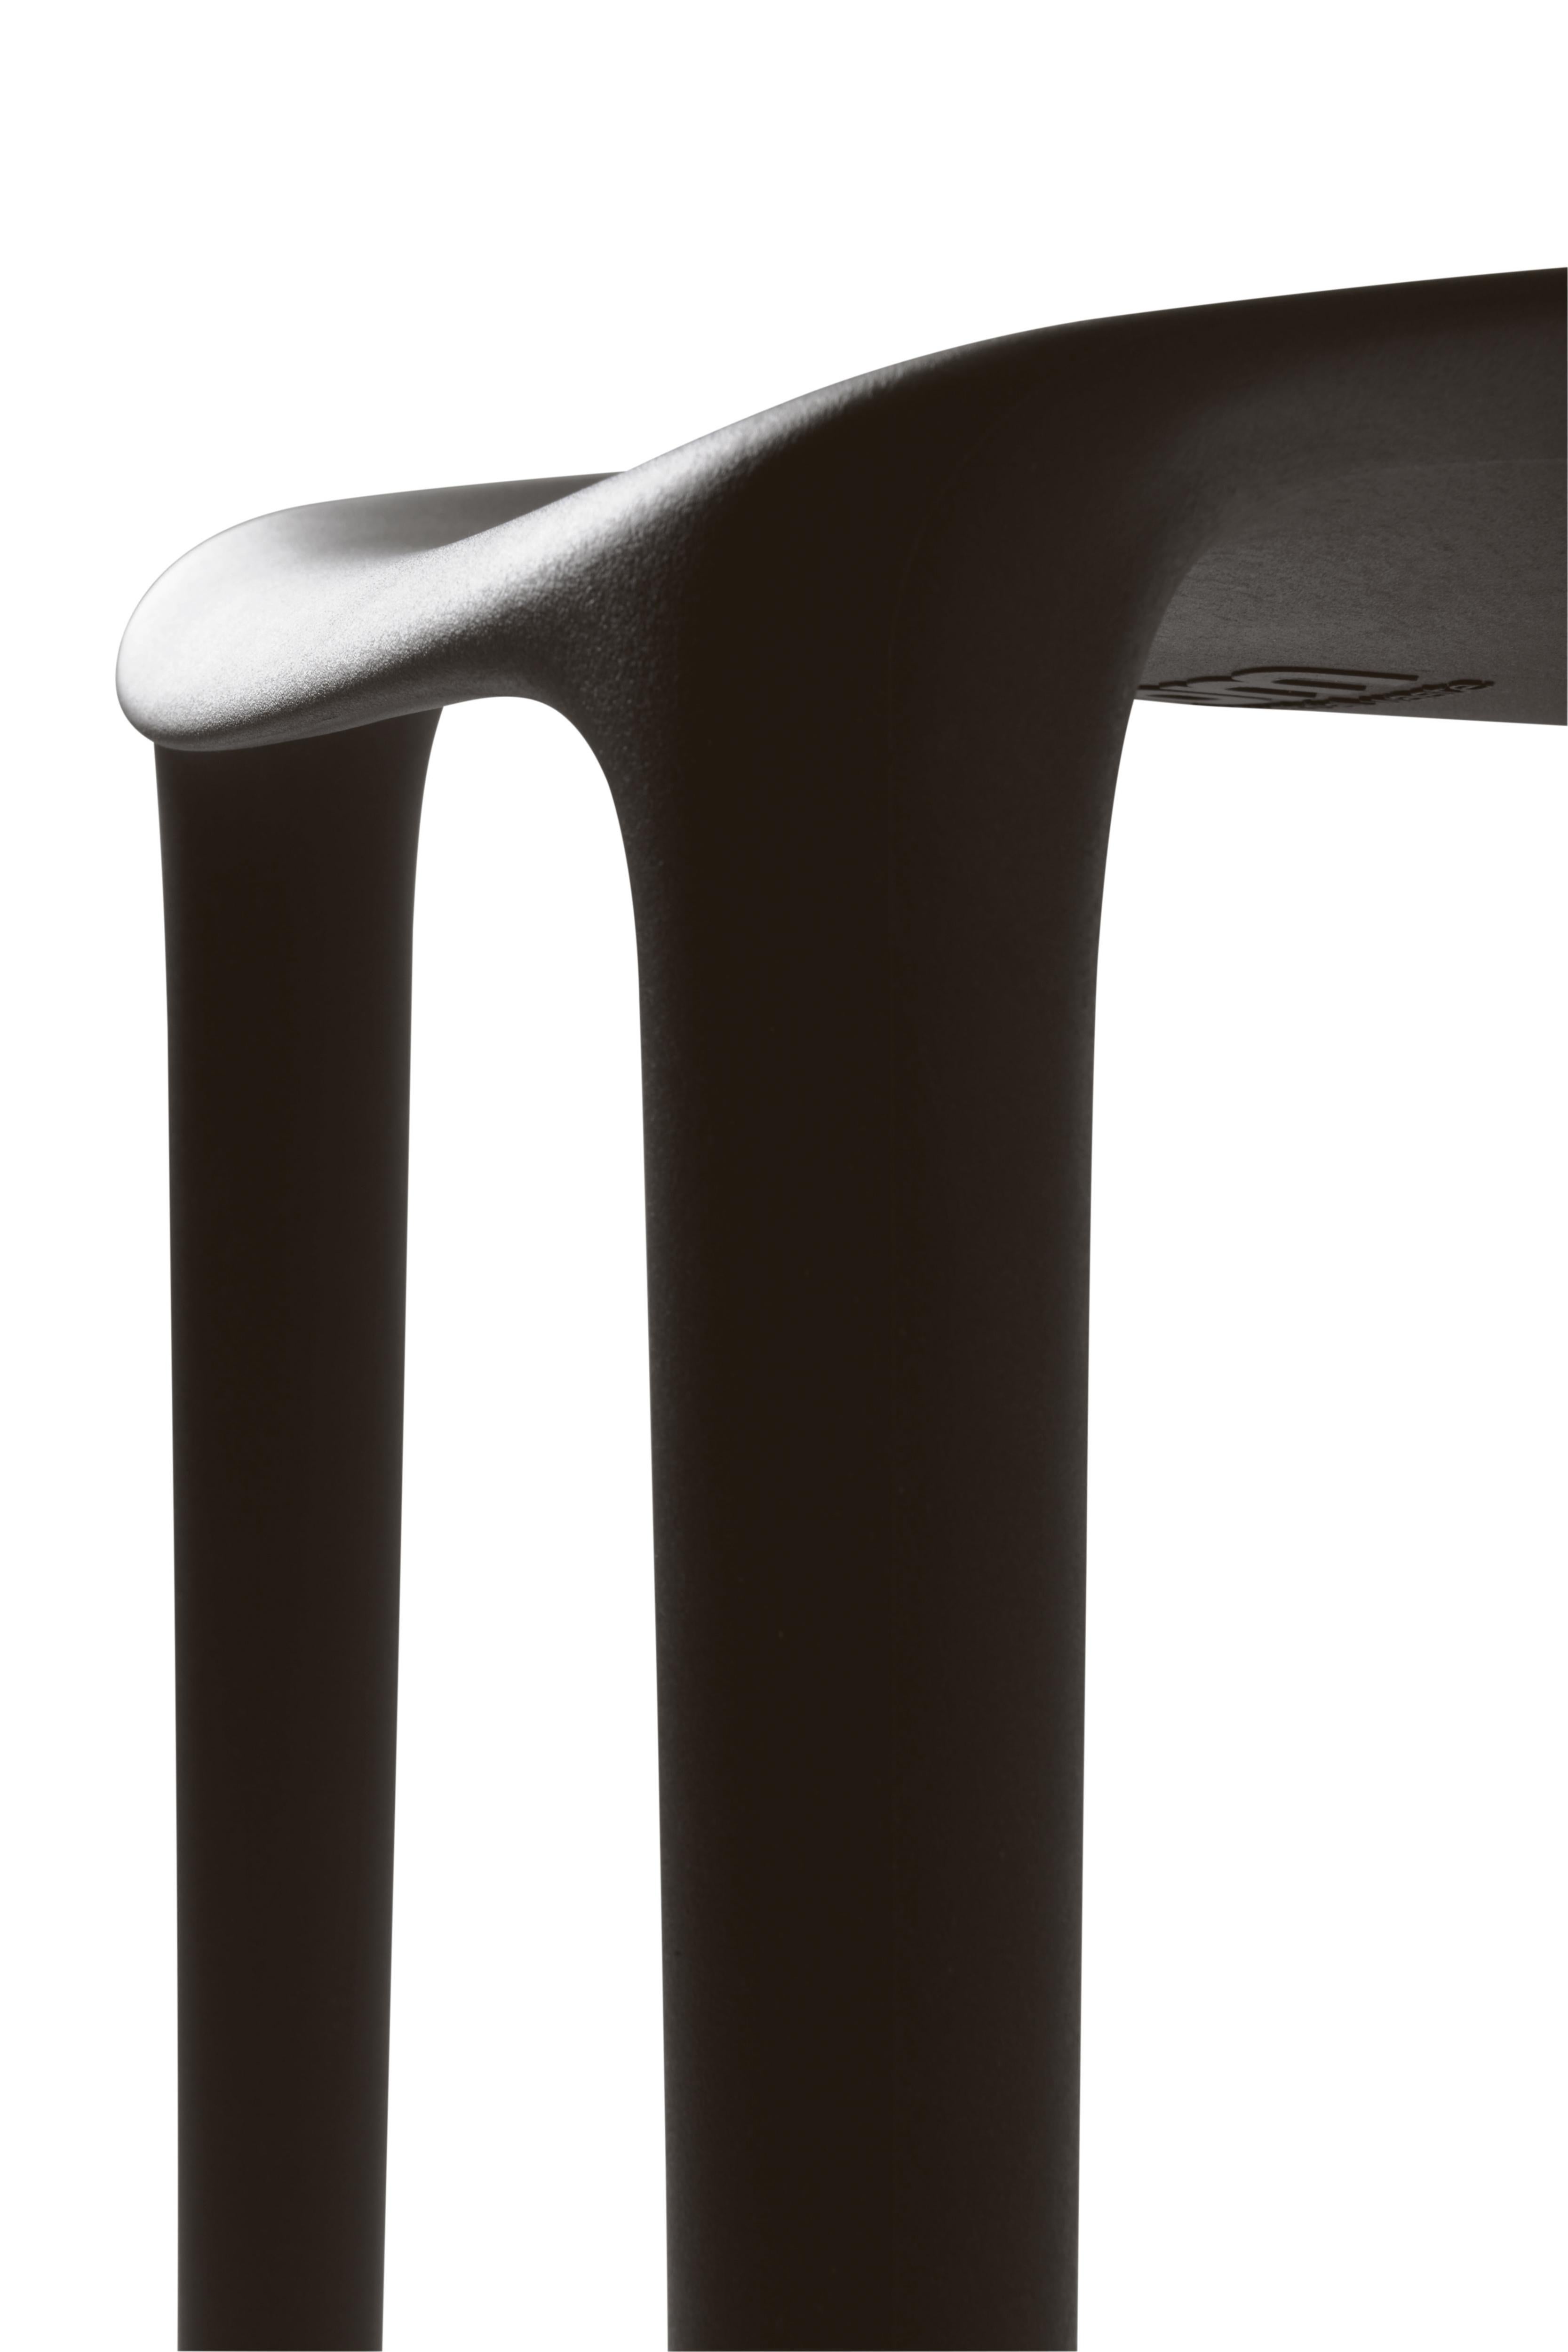 Emeco Broom Stapelbarer Stuhl in Braun von Philippe Starck (Moderne) im Angebot